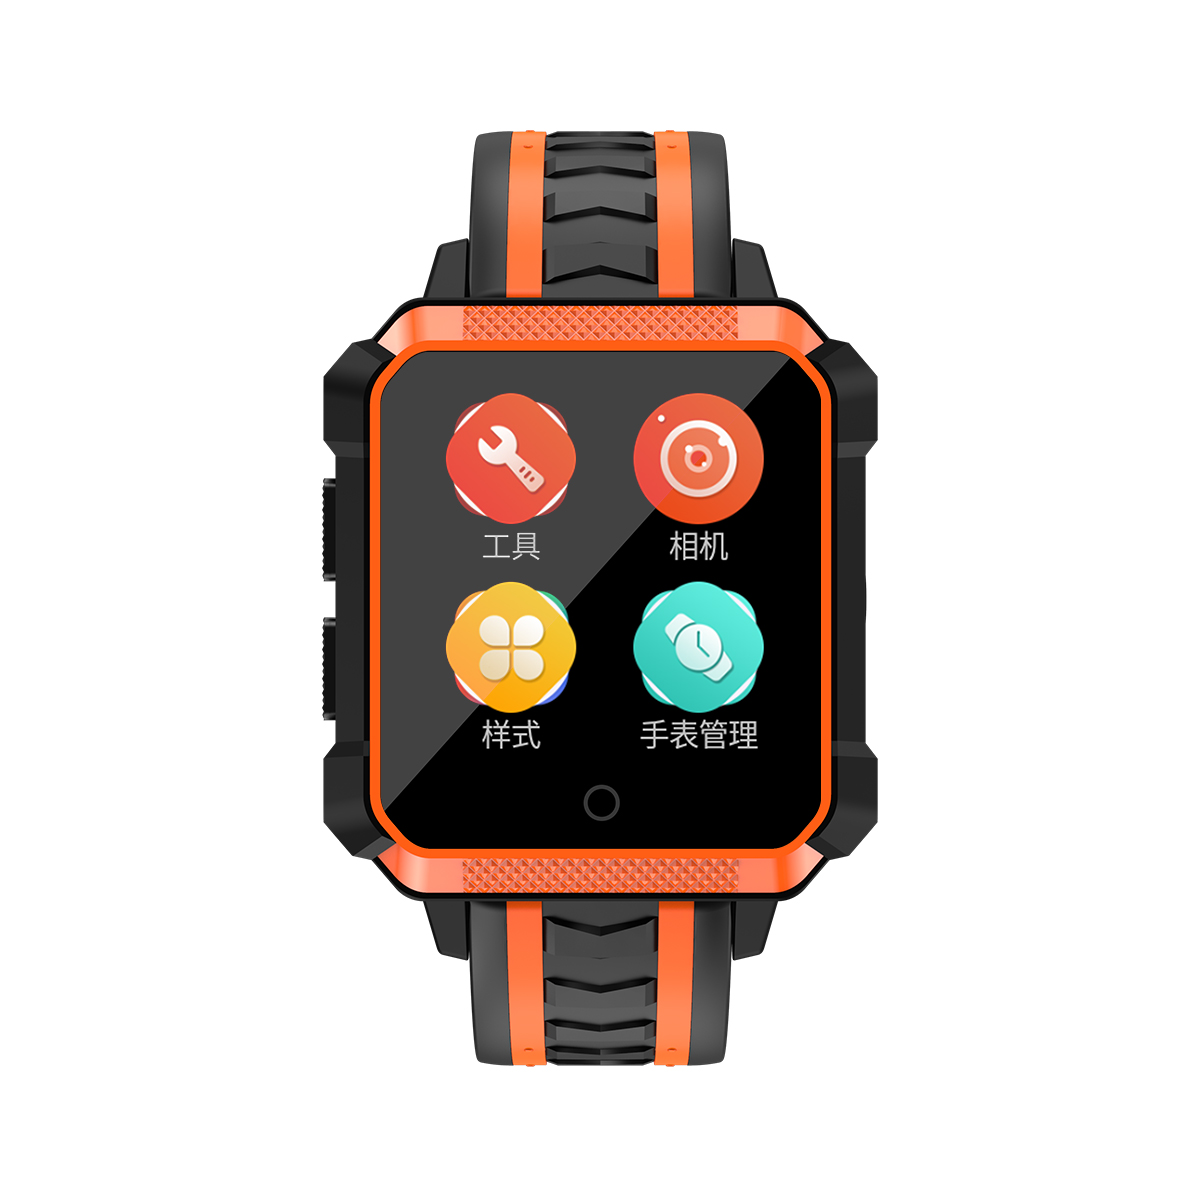 HIGE/H7智能手表 心率监测 语音翻译 4G上网通话智能拍照 IP67级防水 户外运动智能手表 橙色